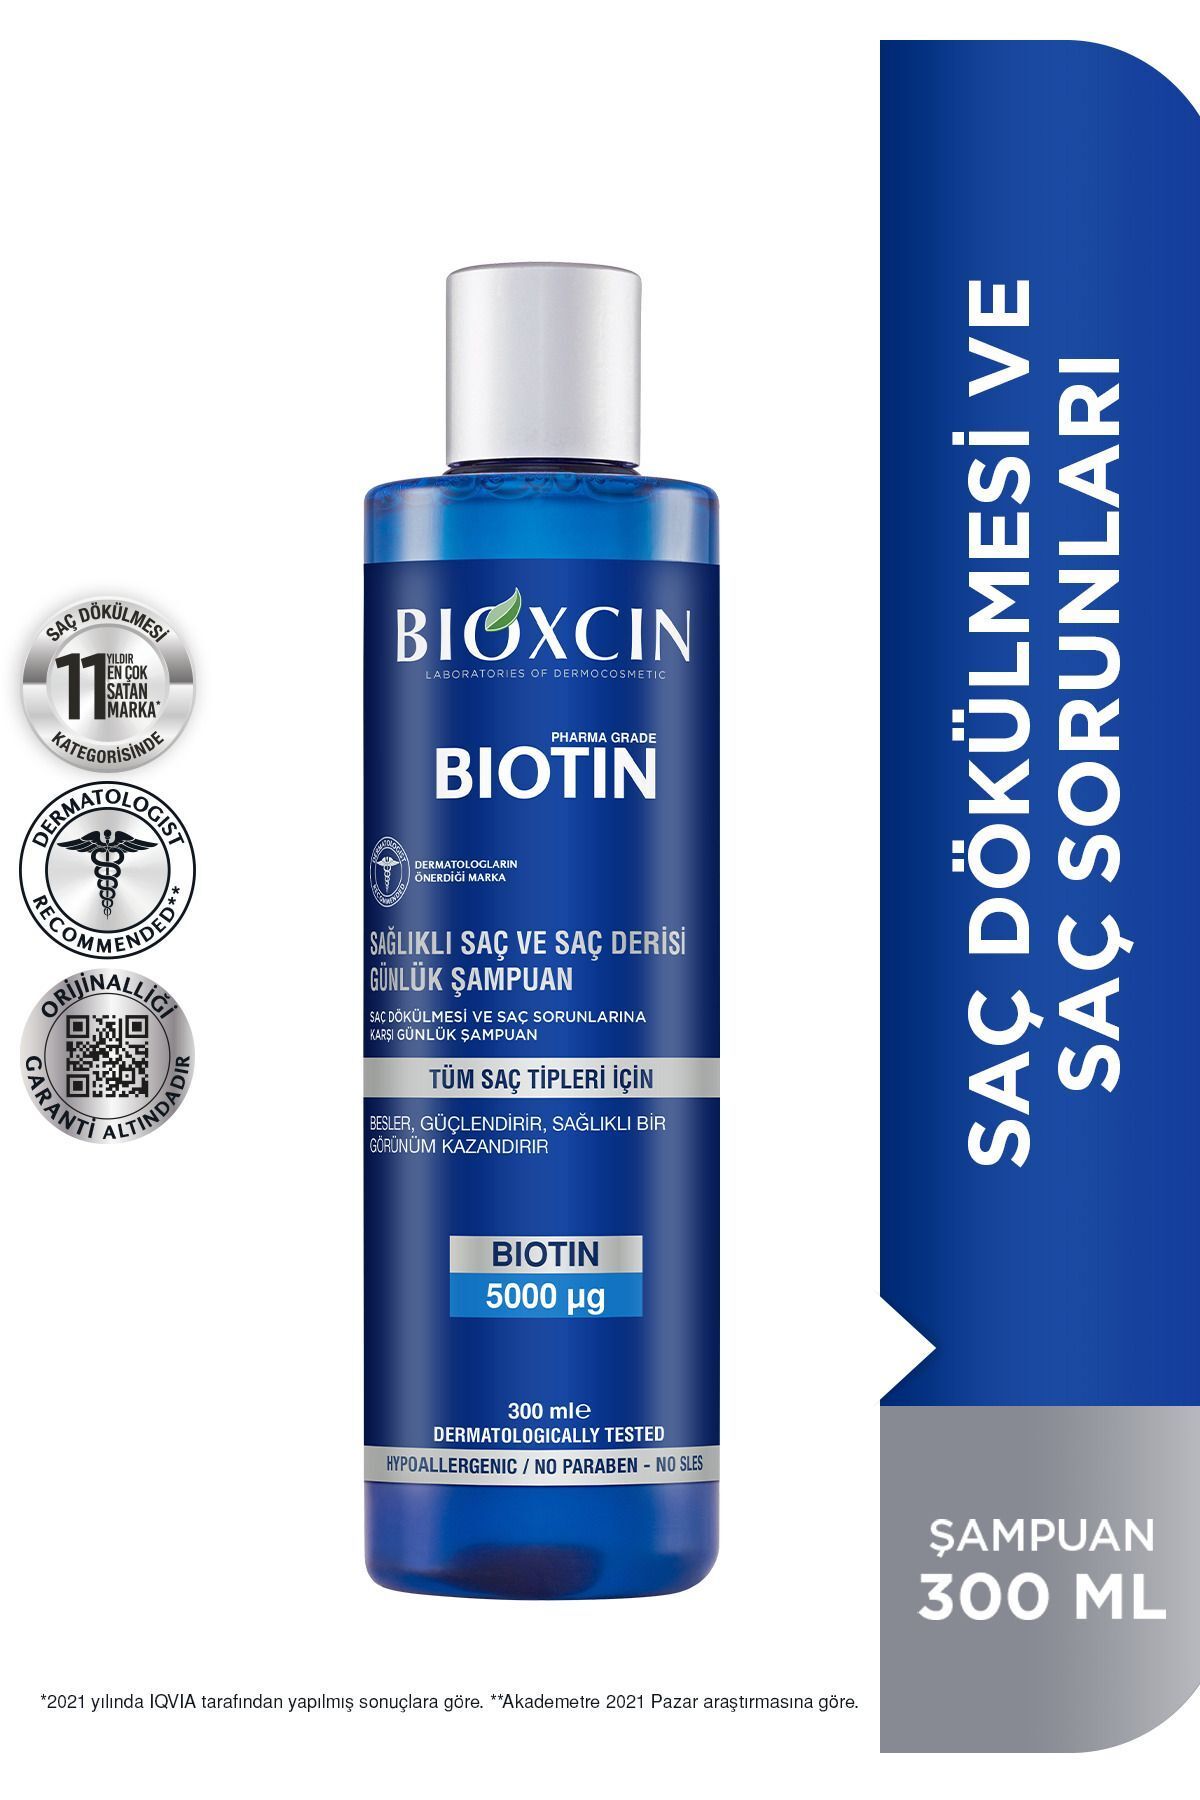 Bioxcin Biotin Şampuan 300 ml - Hassas Saç Derisi Hassas Saçlar